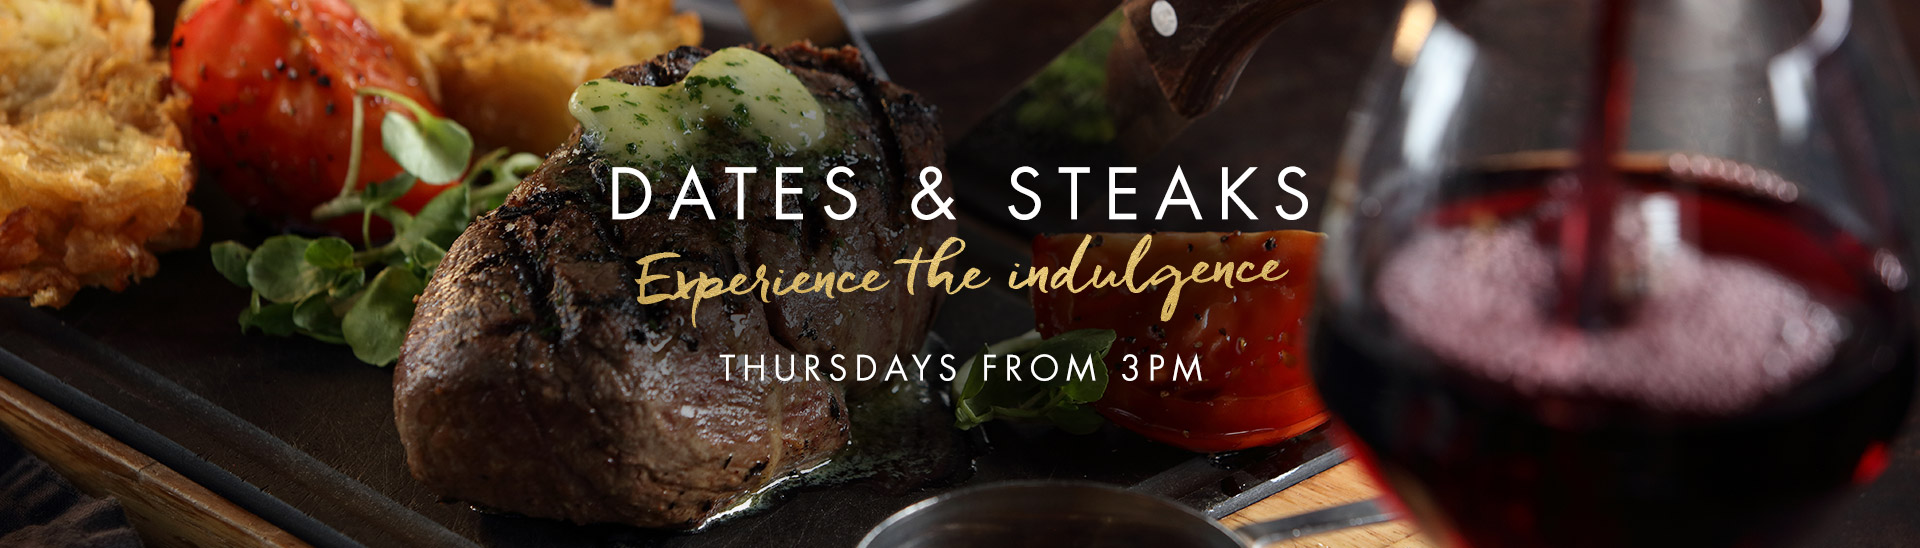 Dates & Steaks at Miller & Carter Woodford Green